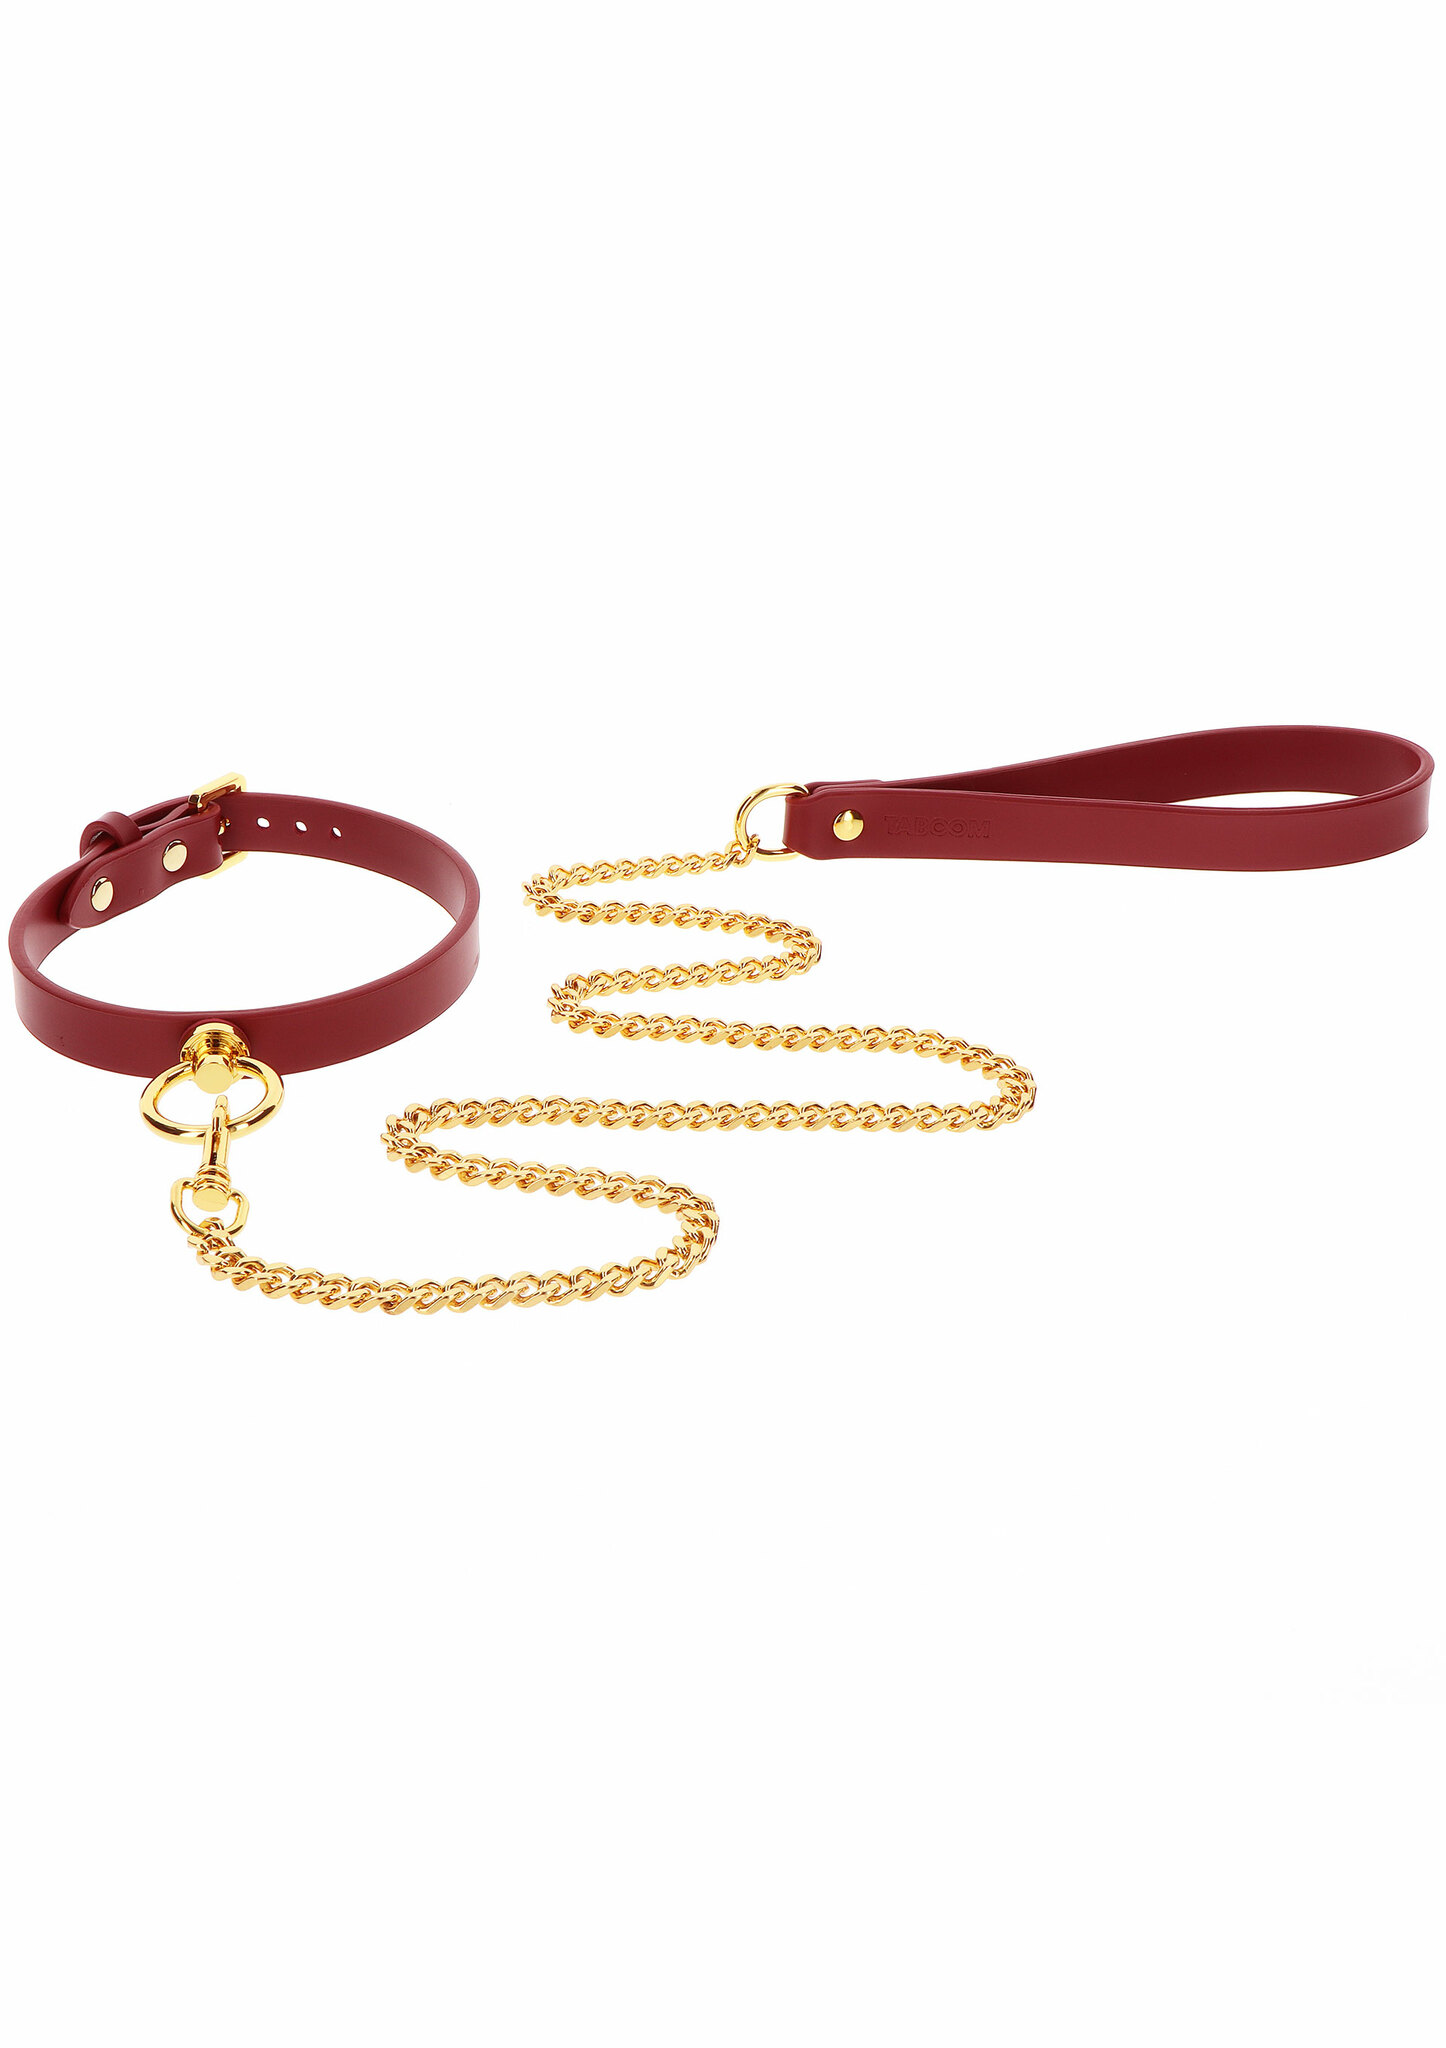 TABOOM - O-Ring Collar and Chain Leash